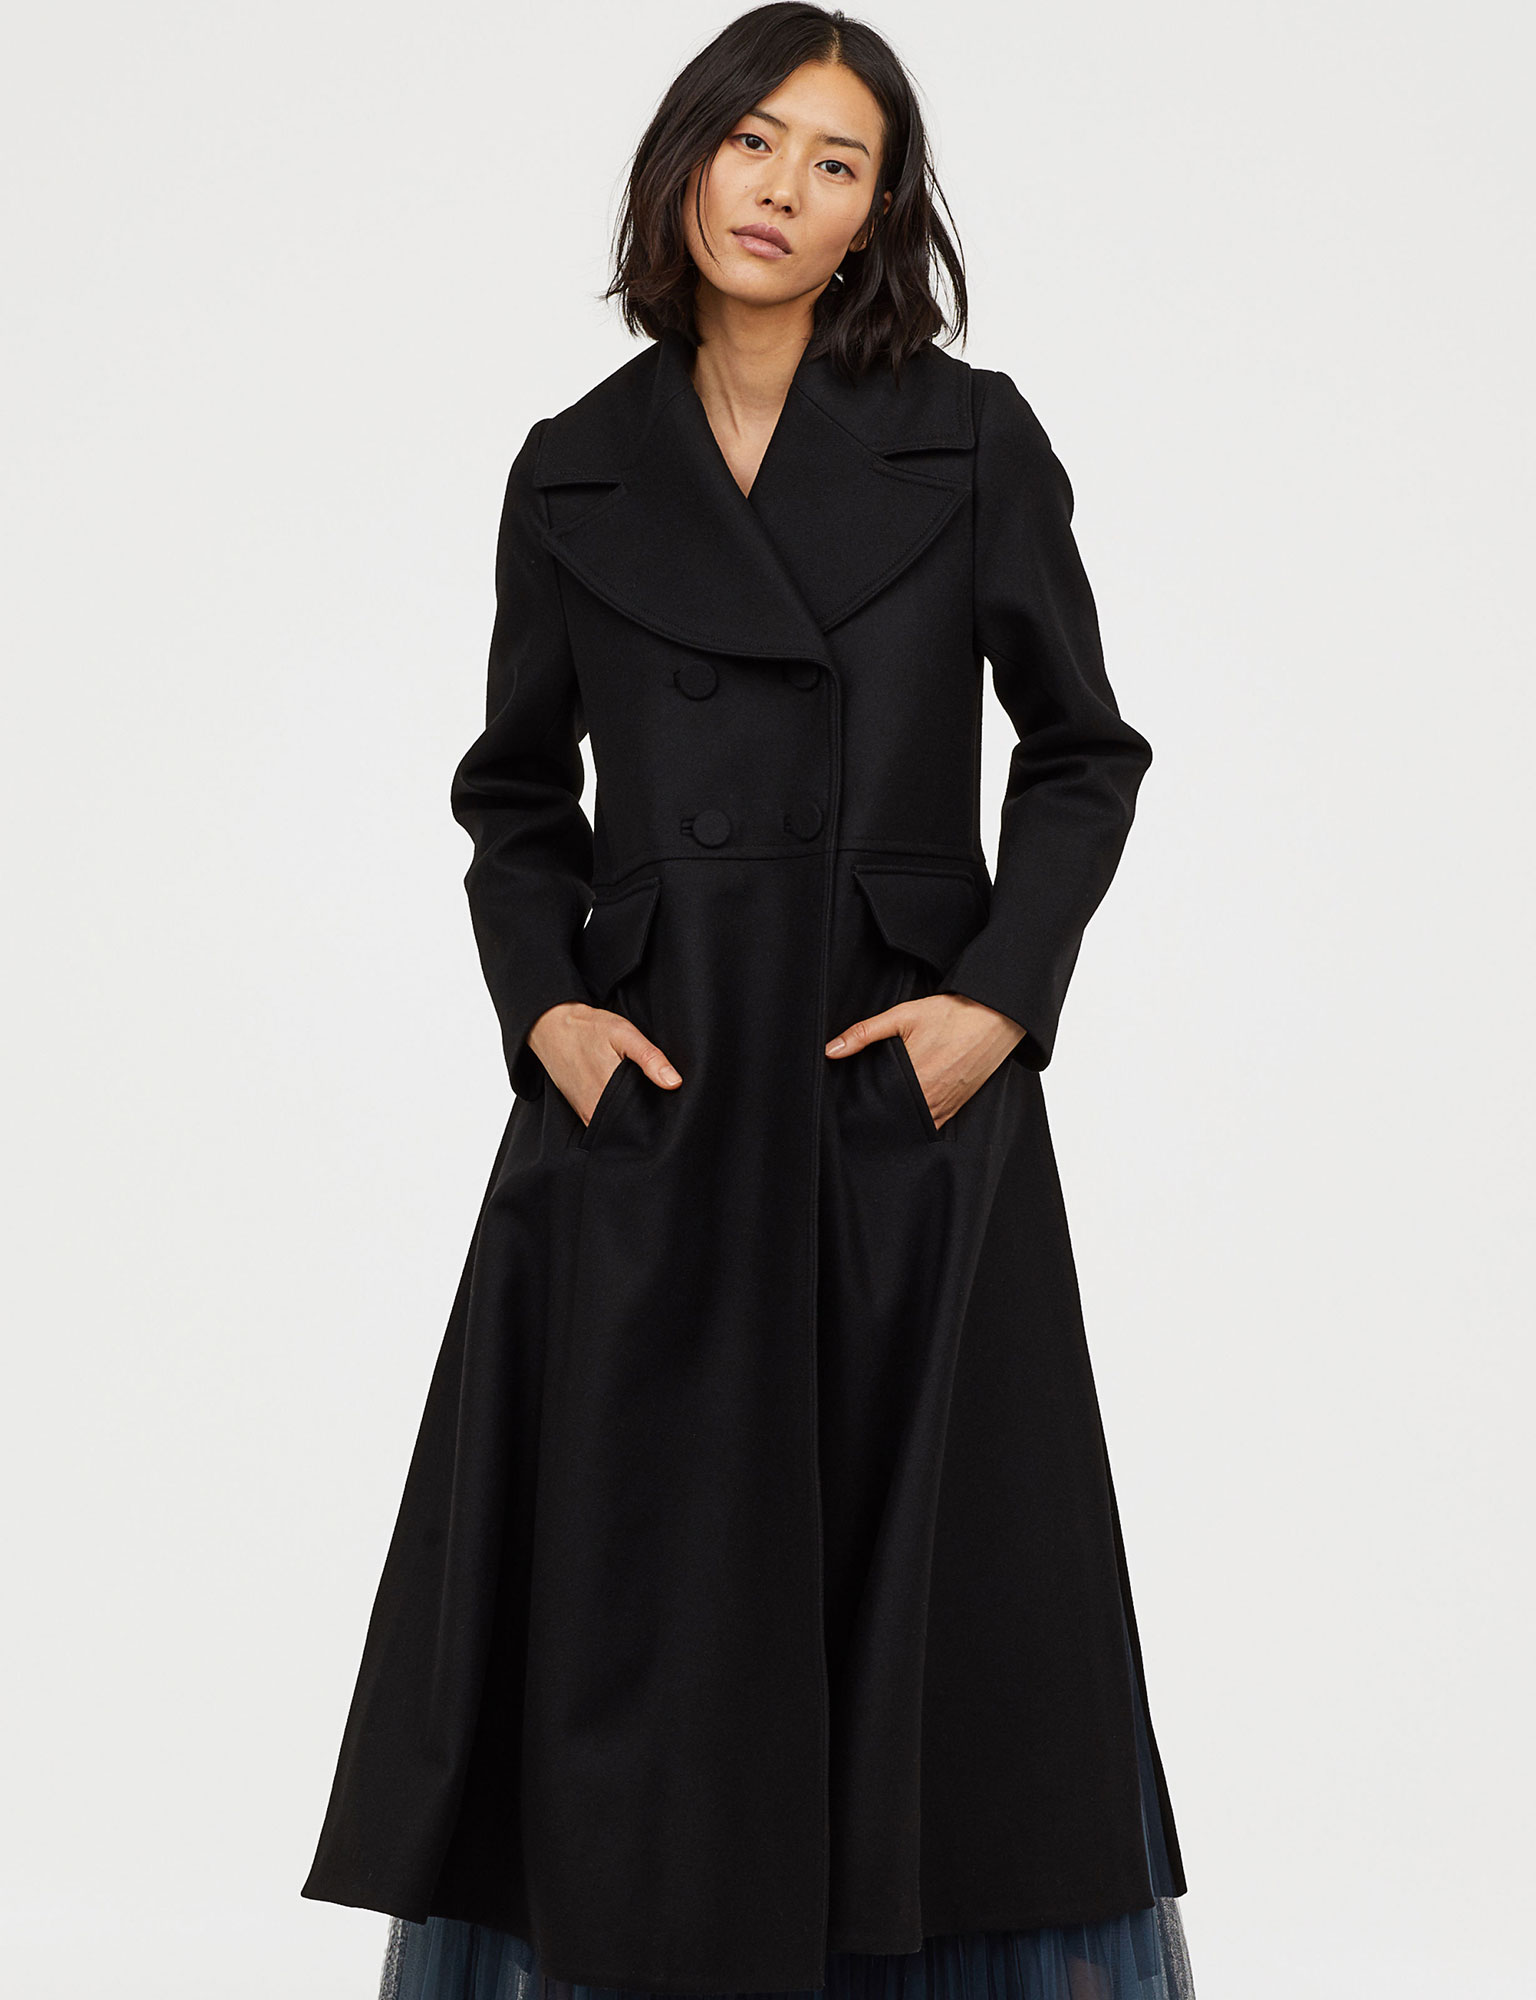 model robe manteau femme